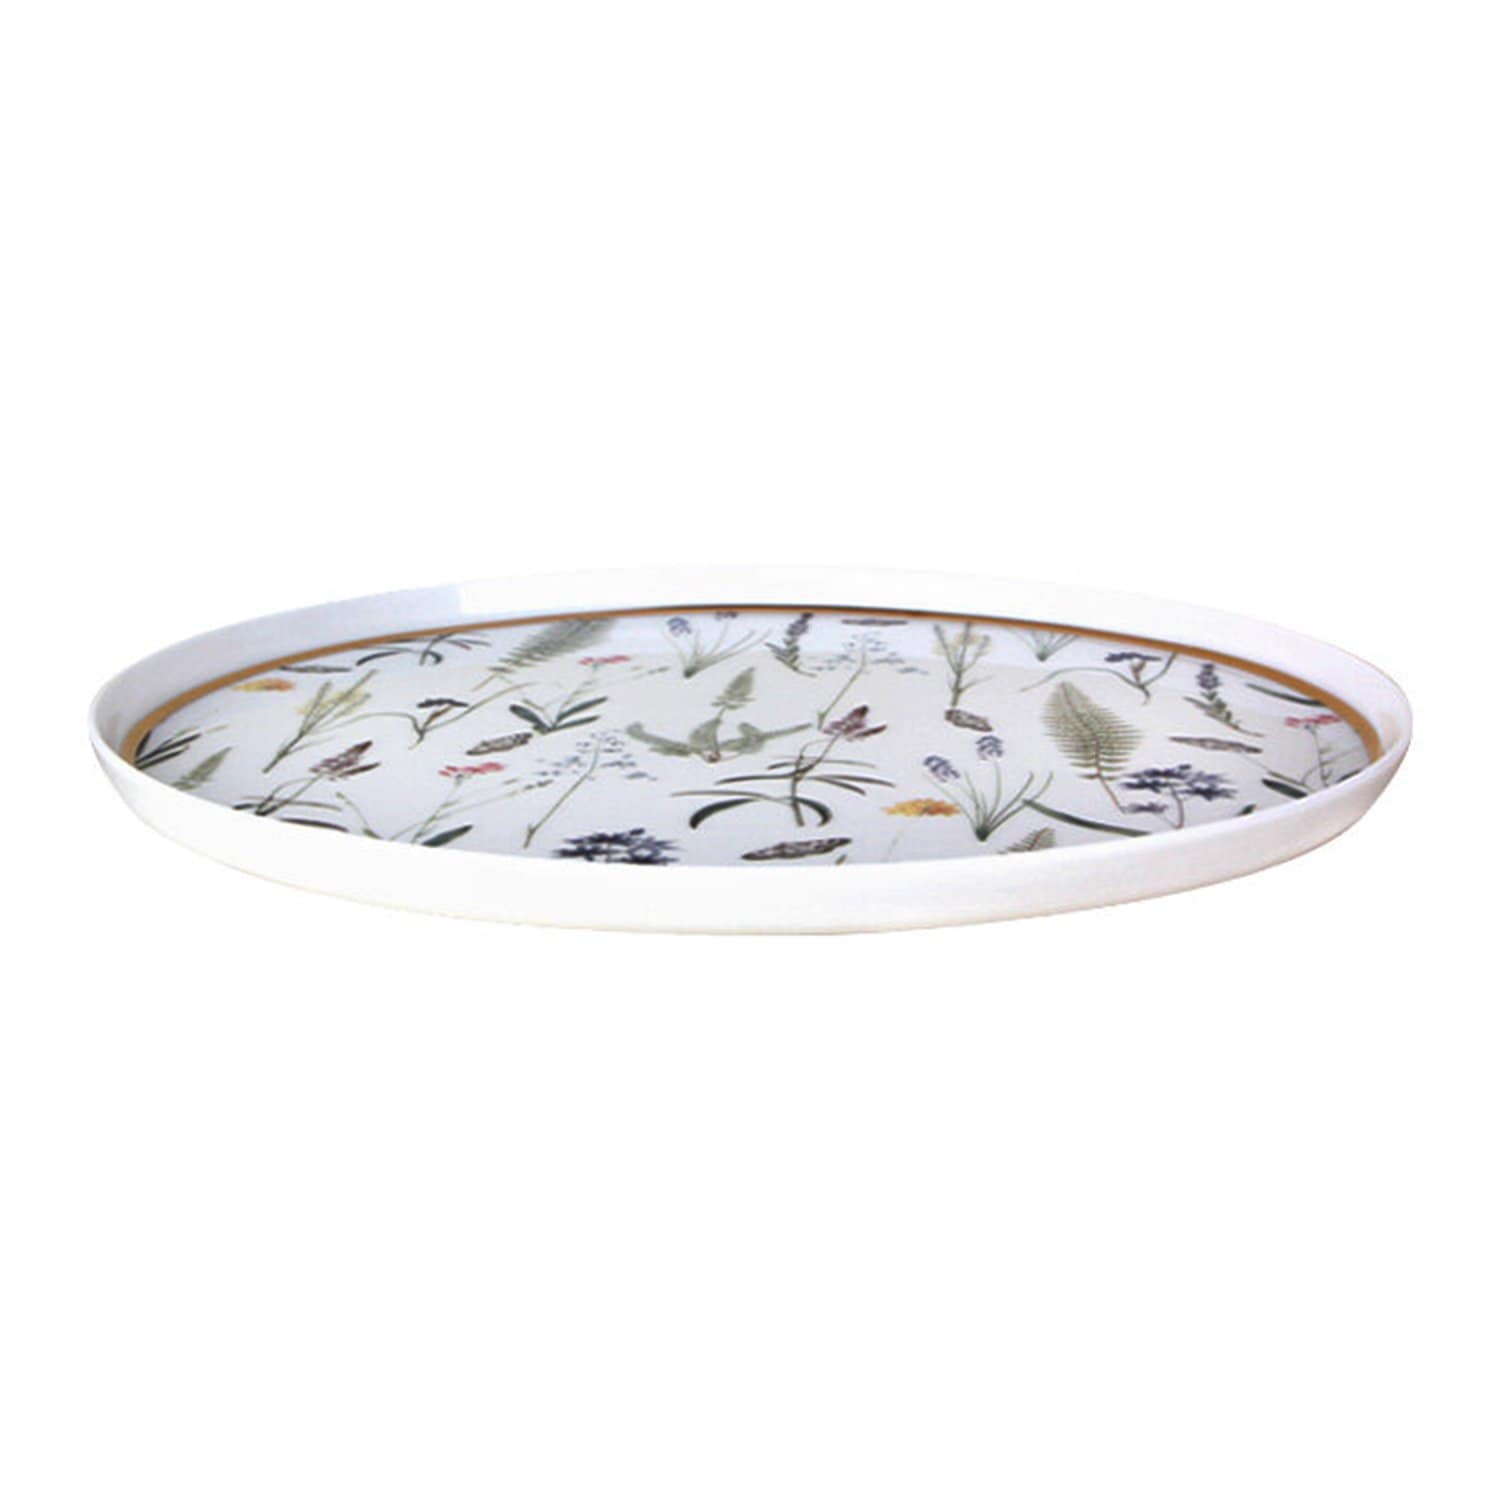 Porland Porselen Botanical Flat Plate - 27 cm - 04ALM005048 - Jashanmal Home